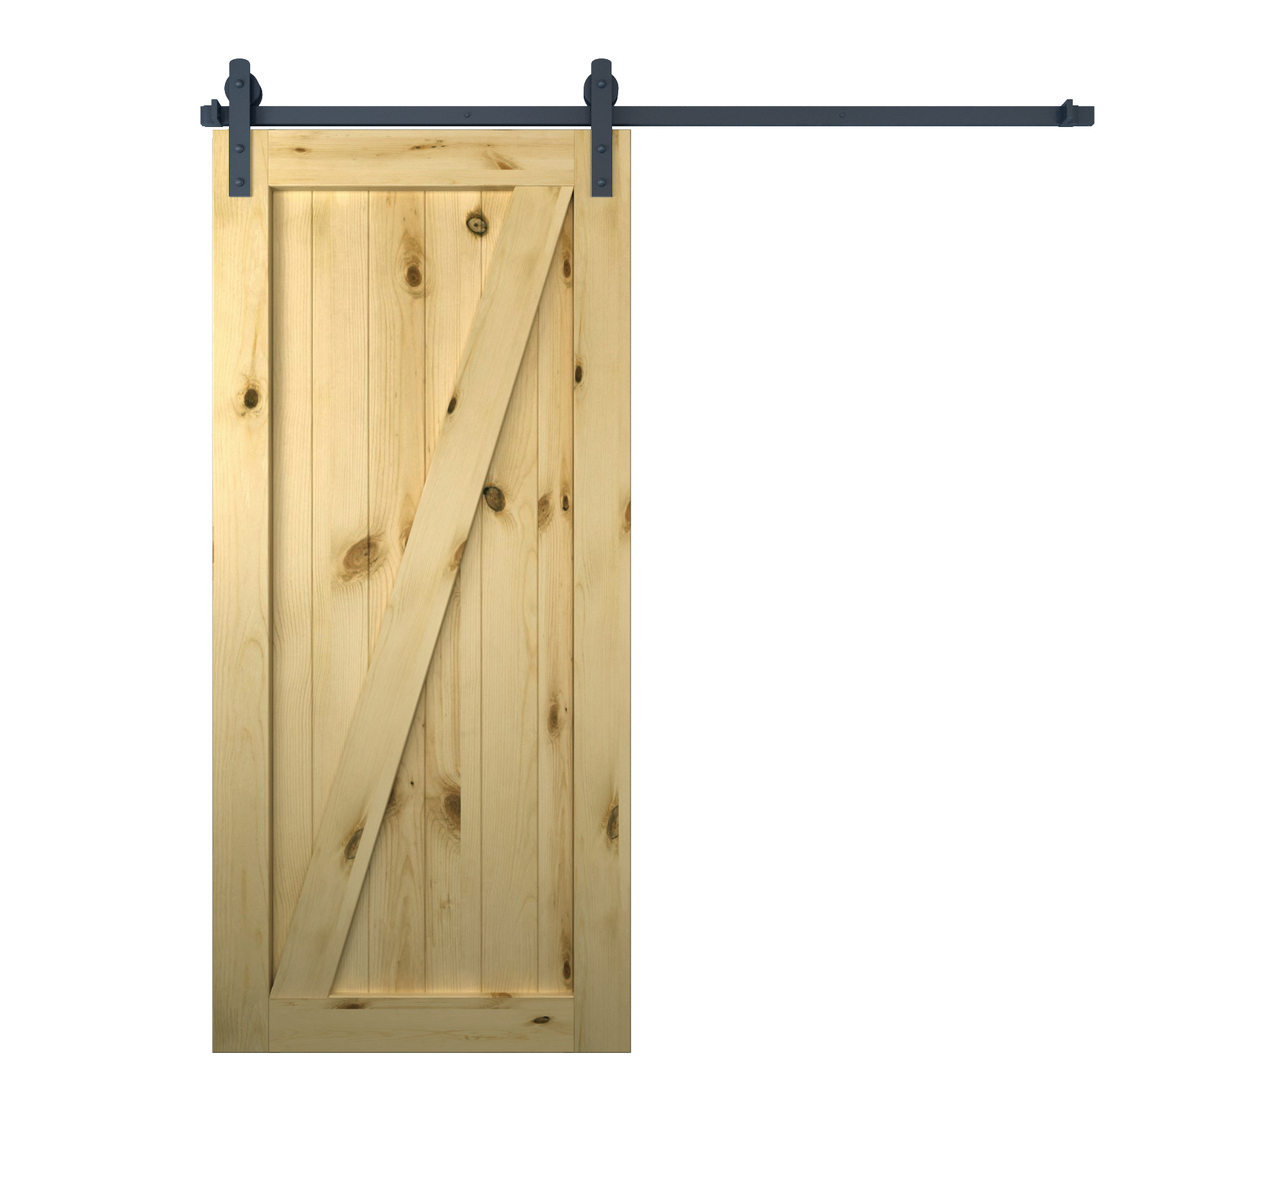 Custom Rustic Barn Door- Sliding Barn Door